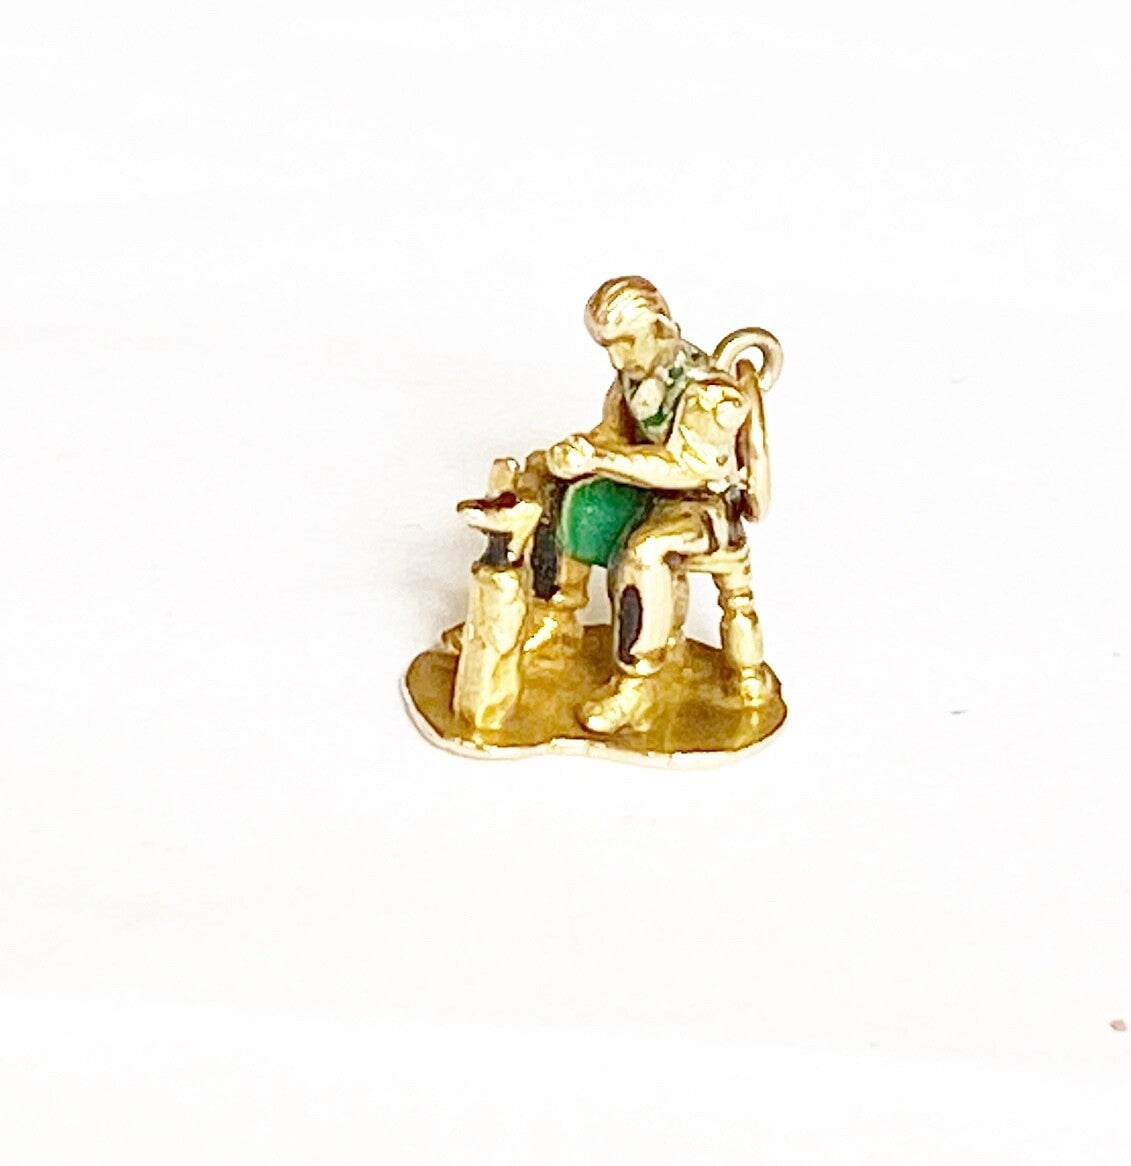 9ct 375 vintage gold articular cobbler charm by Georg Jensen circa 1958